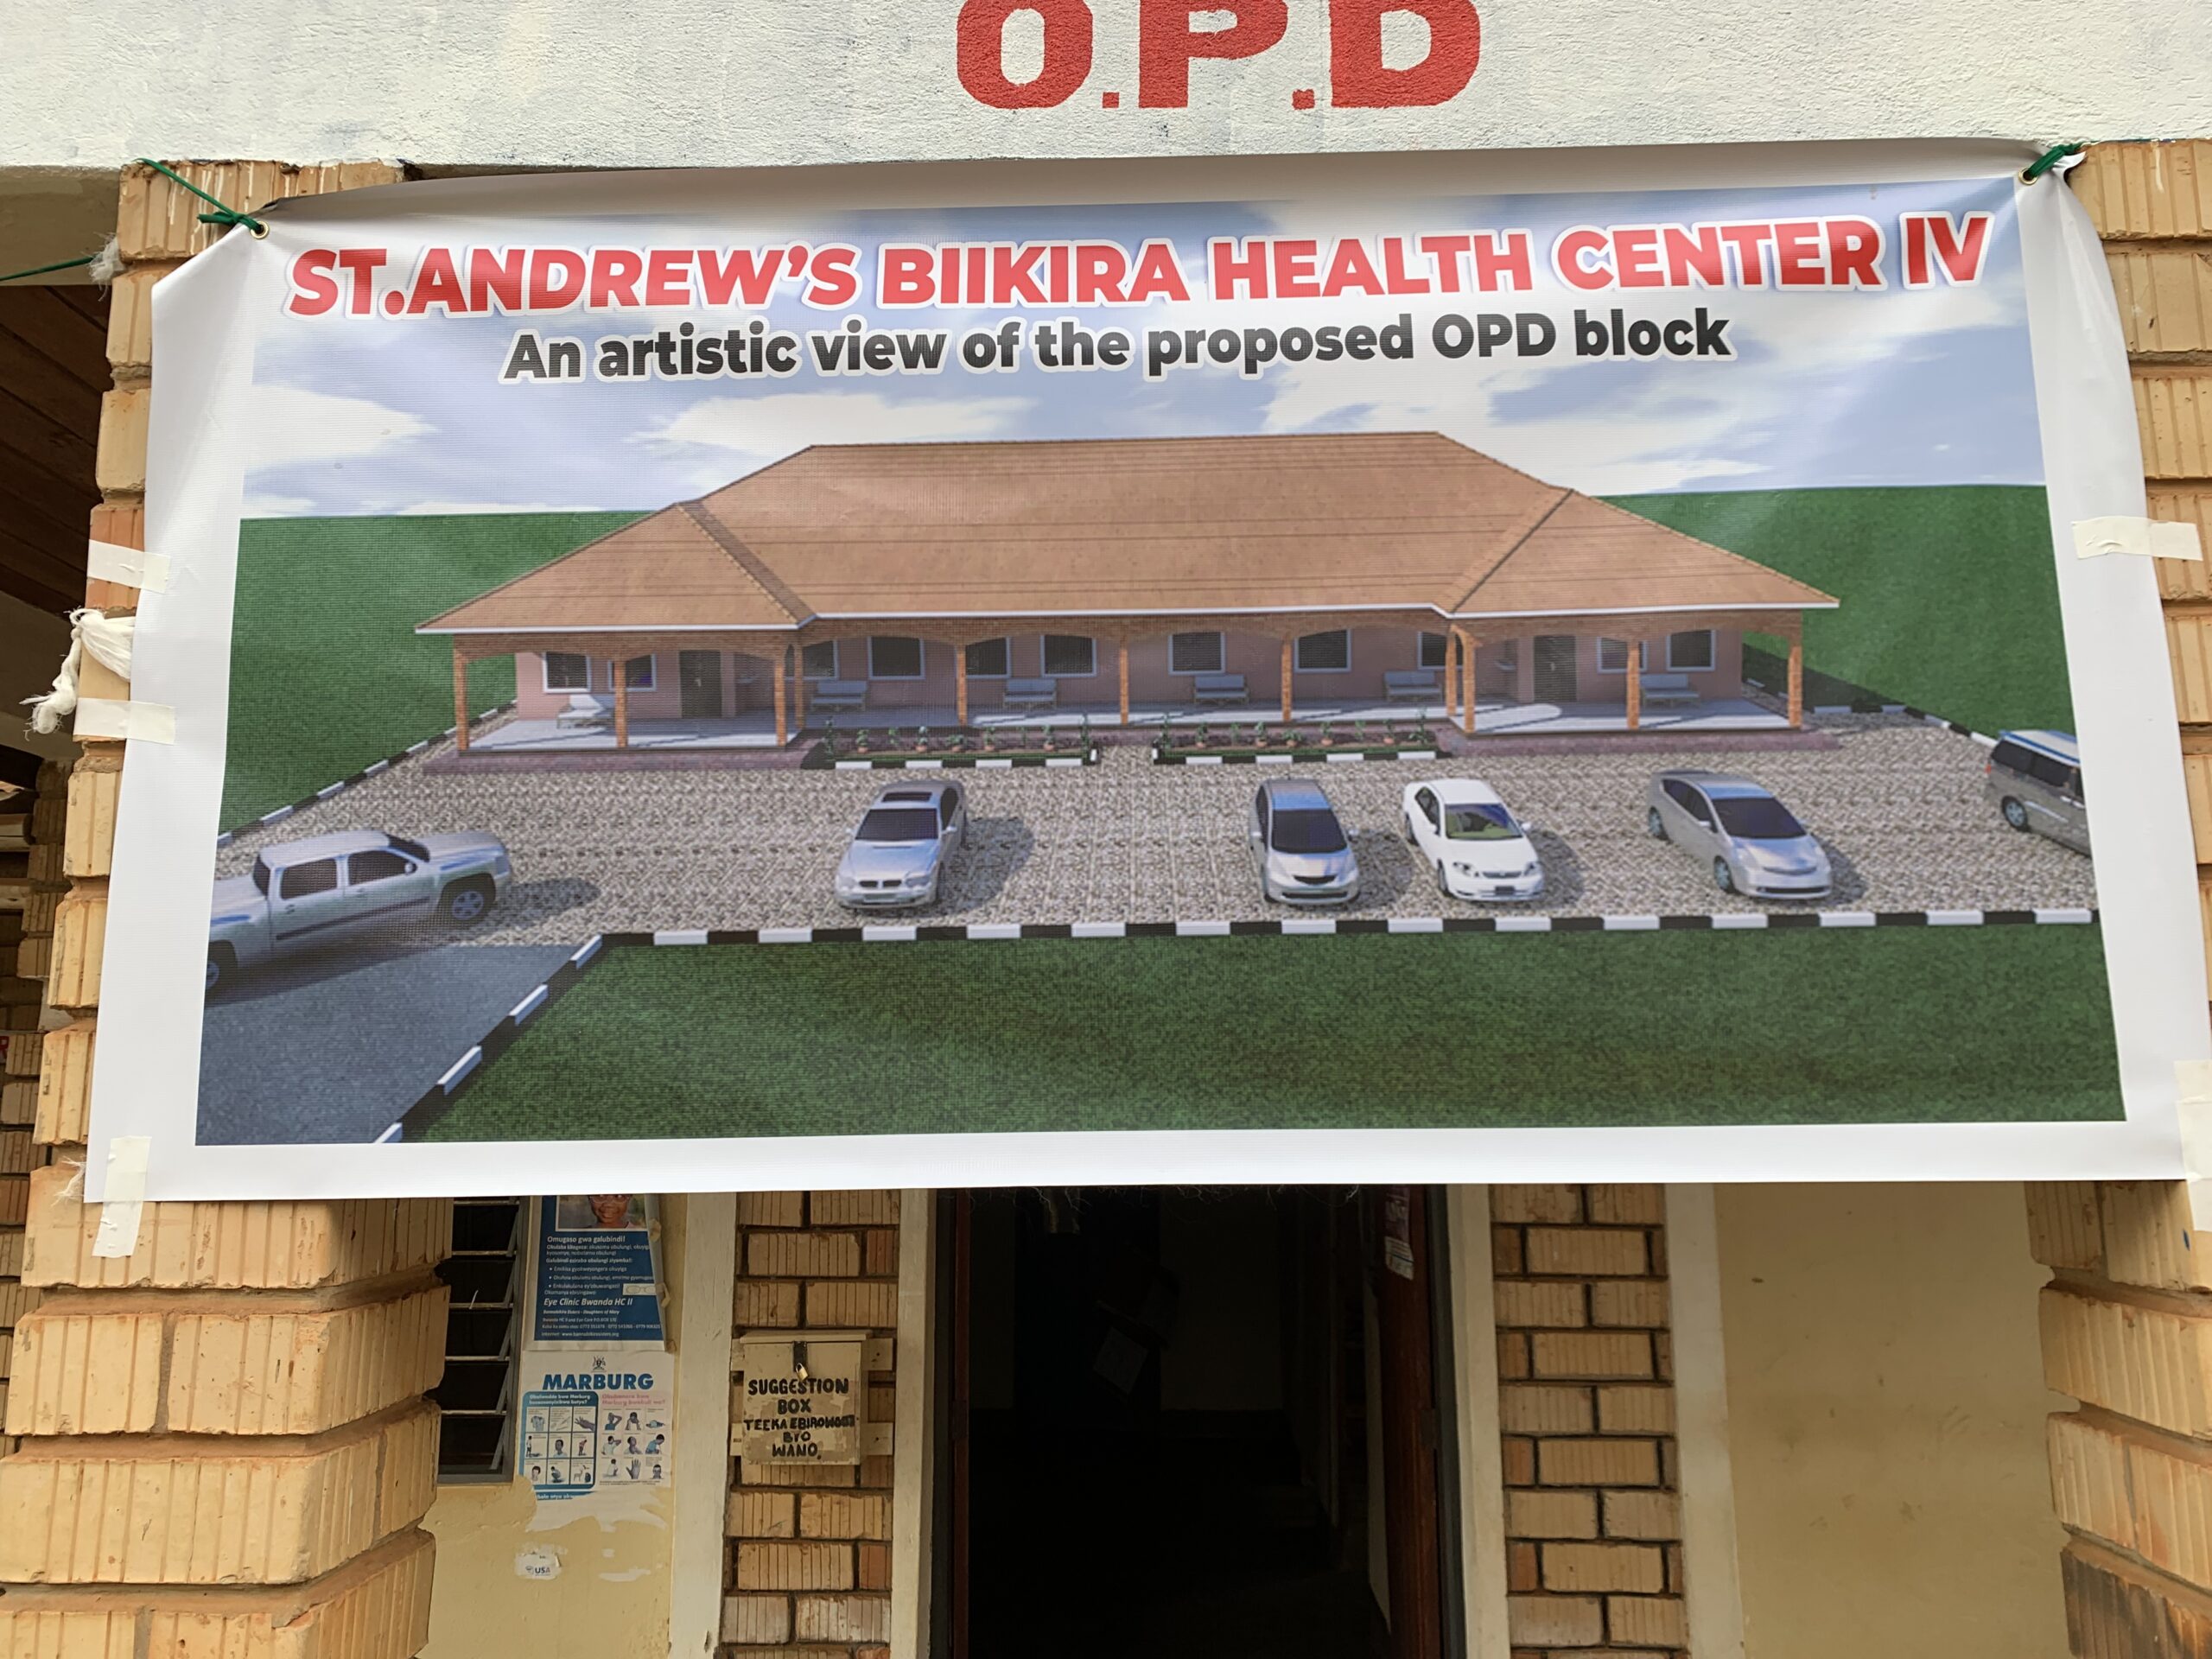 Saint Andrew’s Biikira Health Center IV holds an OPD Block fundraising Dinner